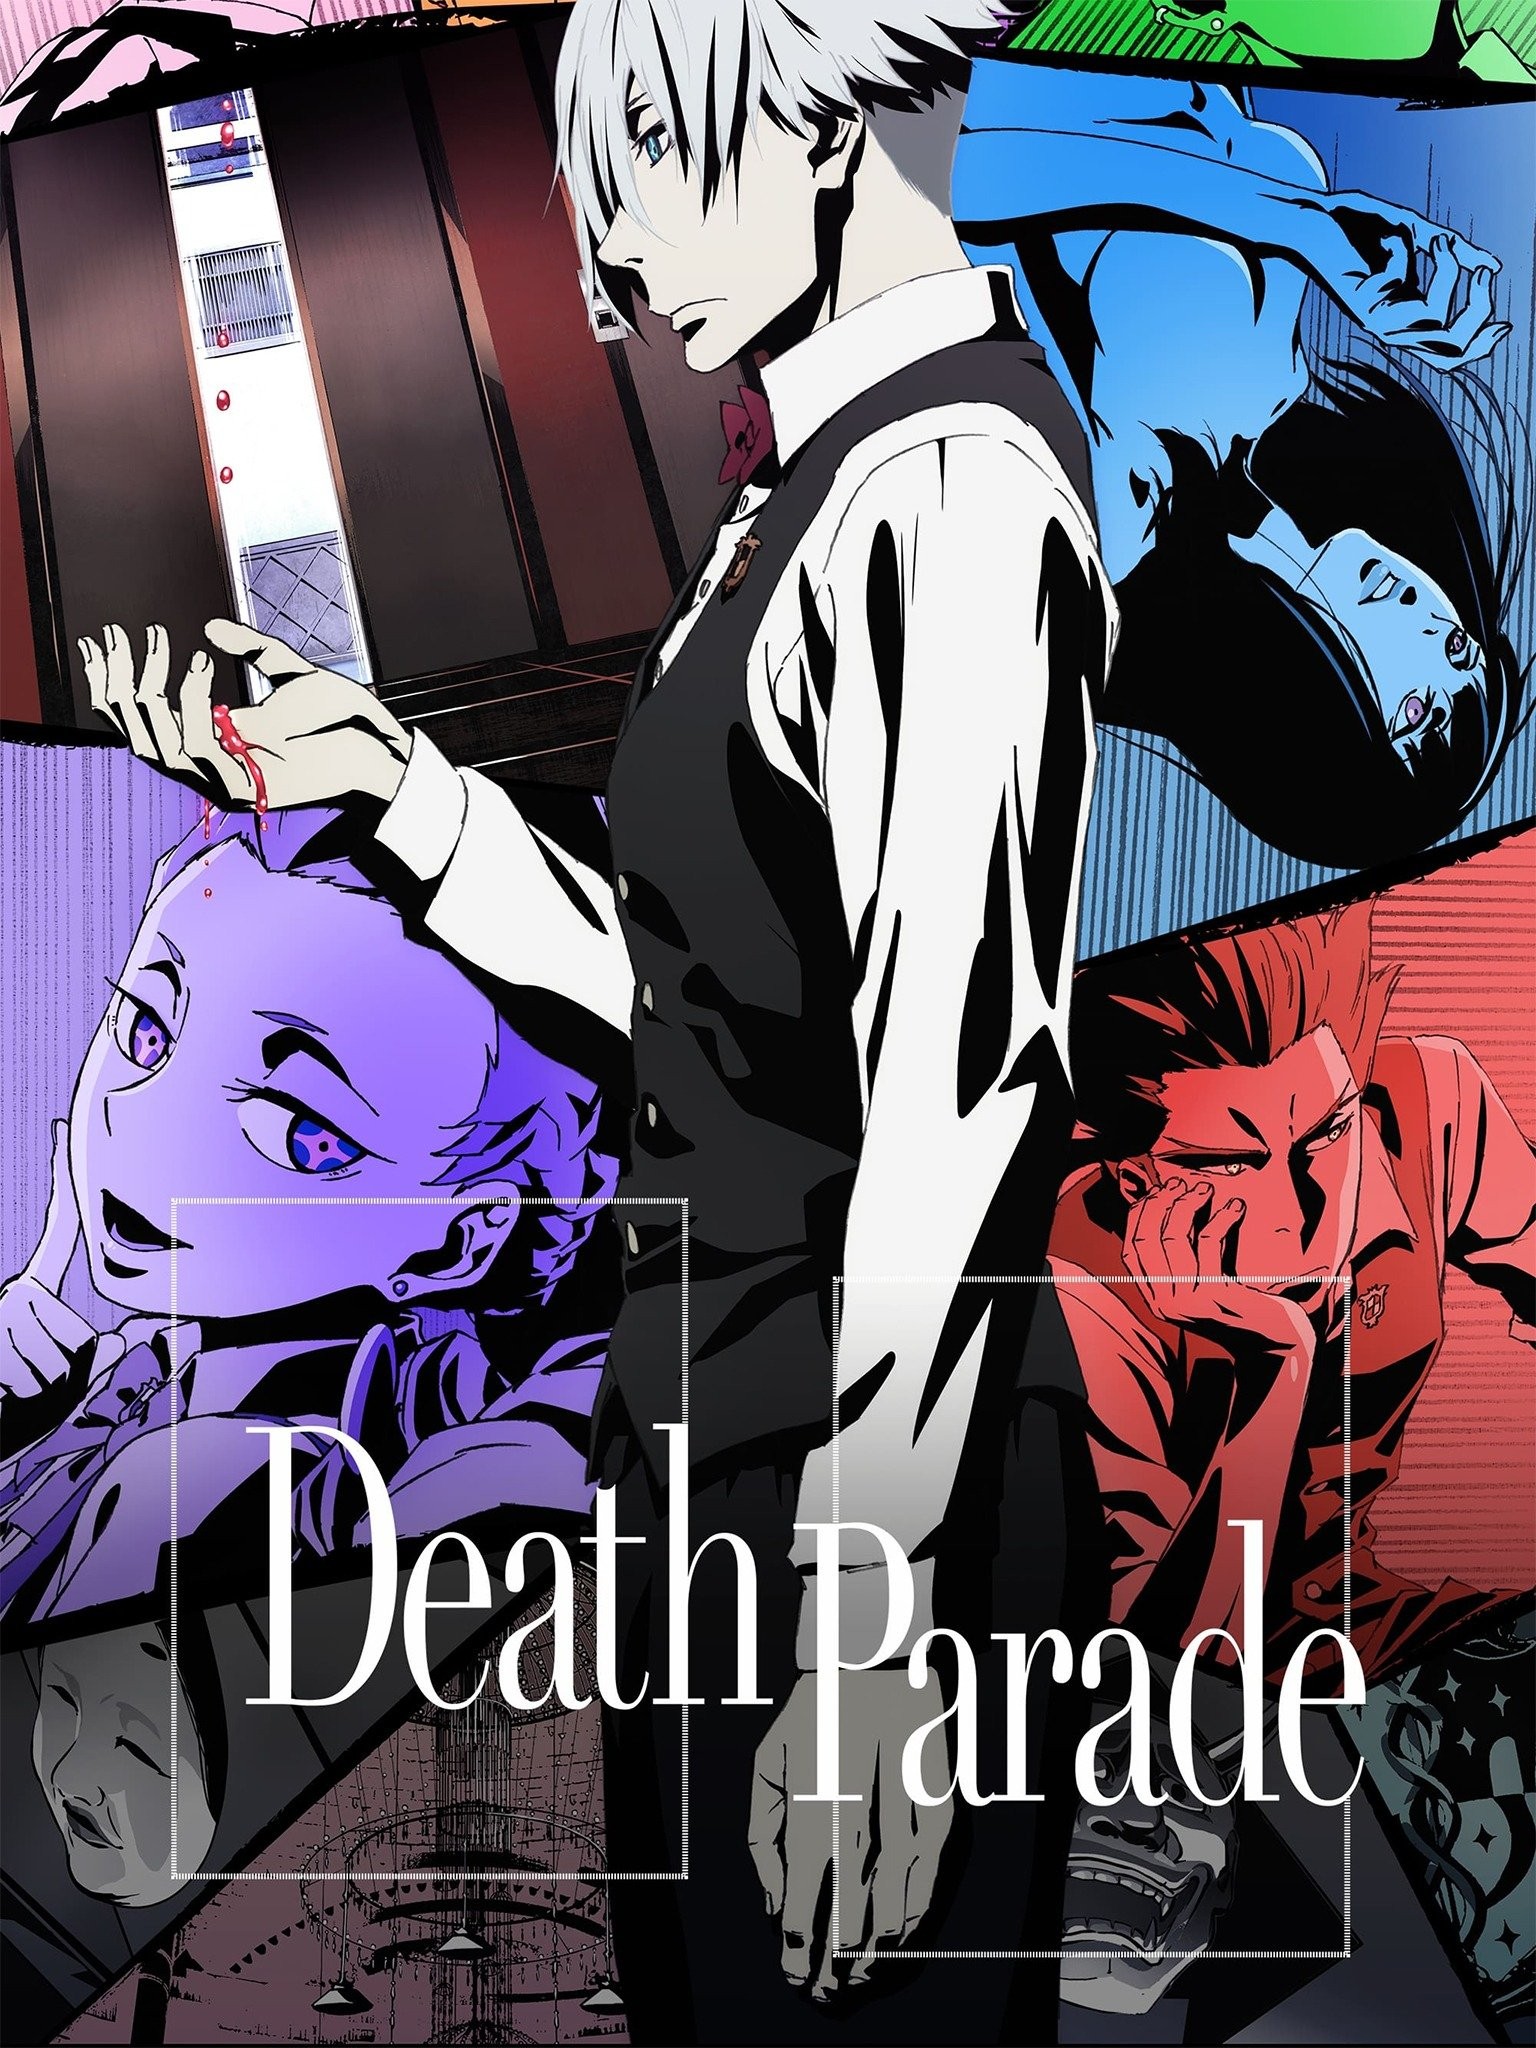 Watch Death Parade Season 1 Episode 5 - Death March Online Now